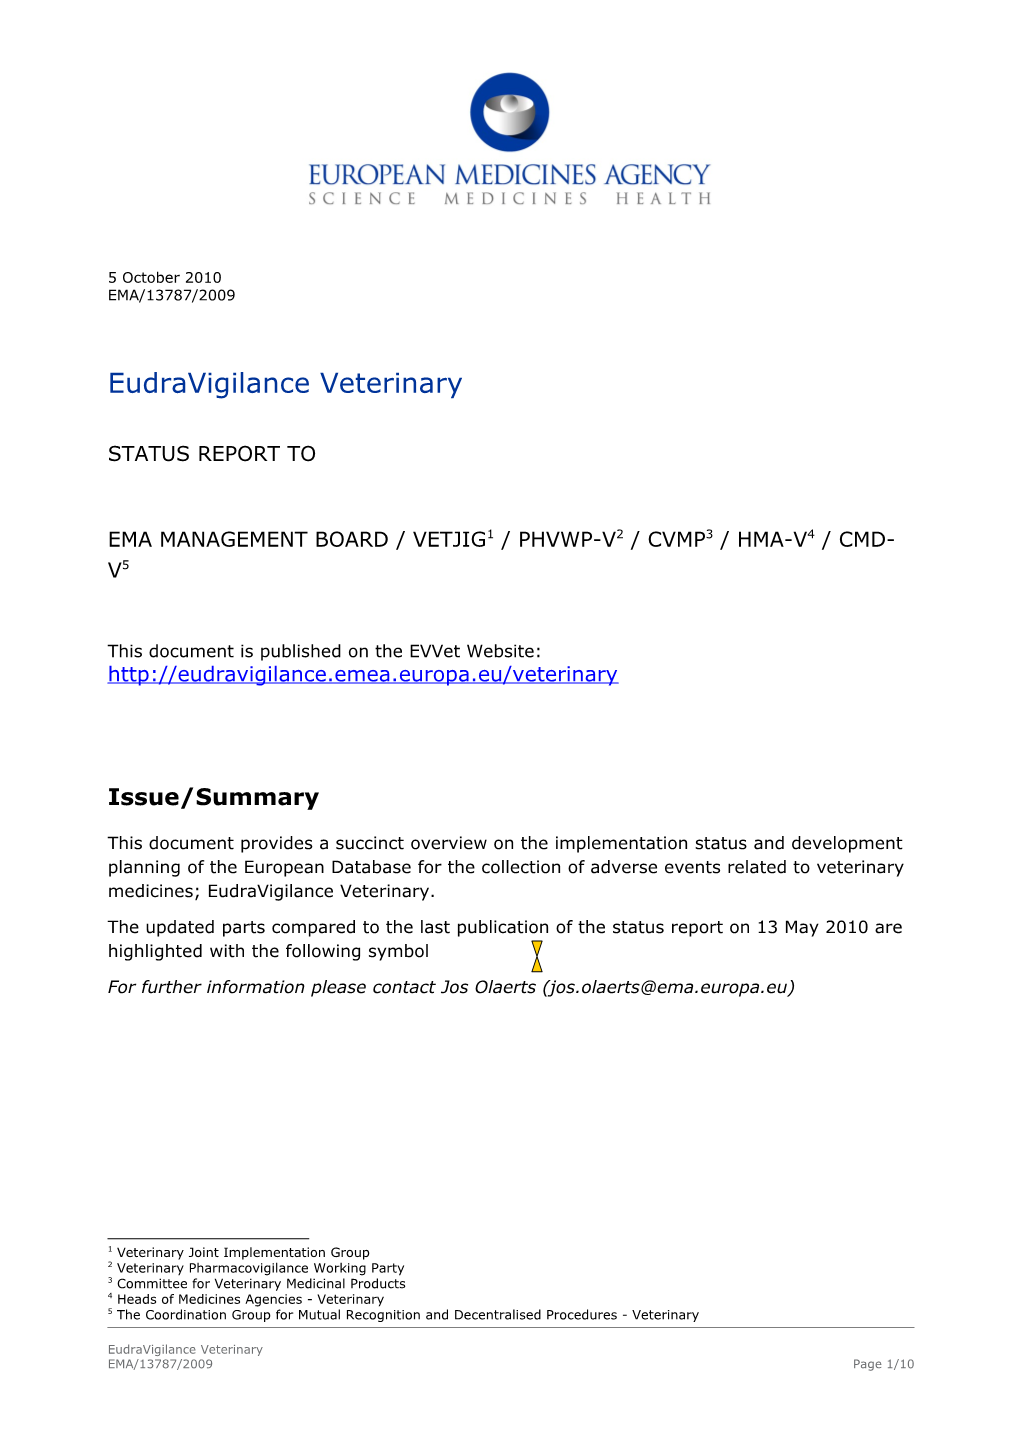 17 Eudravigilance - Veterinary 2009 Status Report